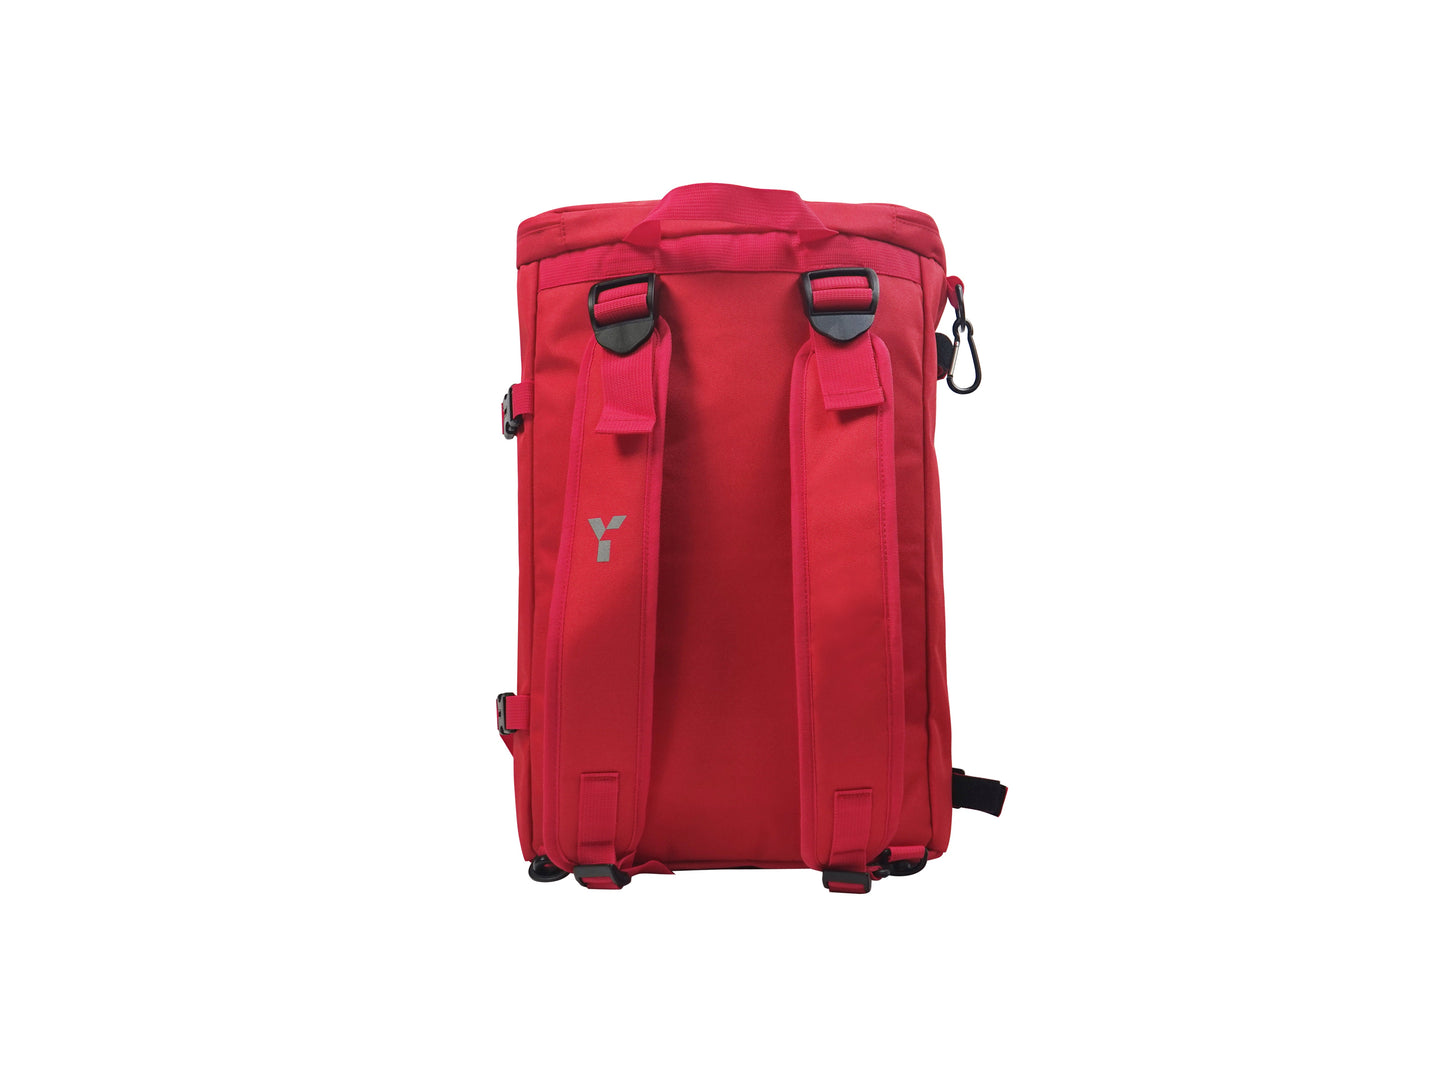 London Edwardians HC - Accra Backpack - Red